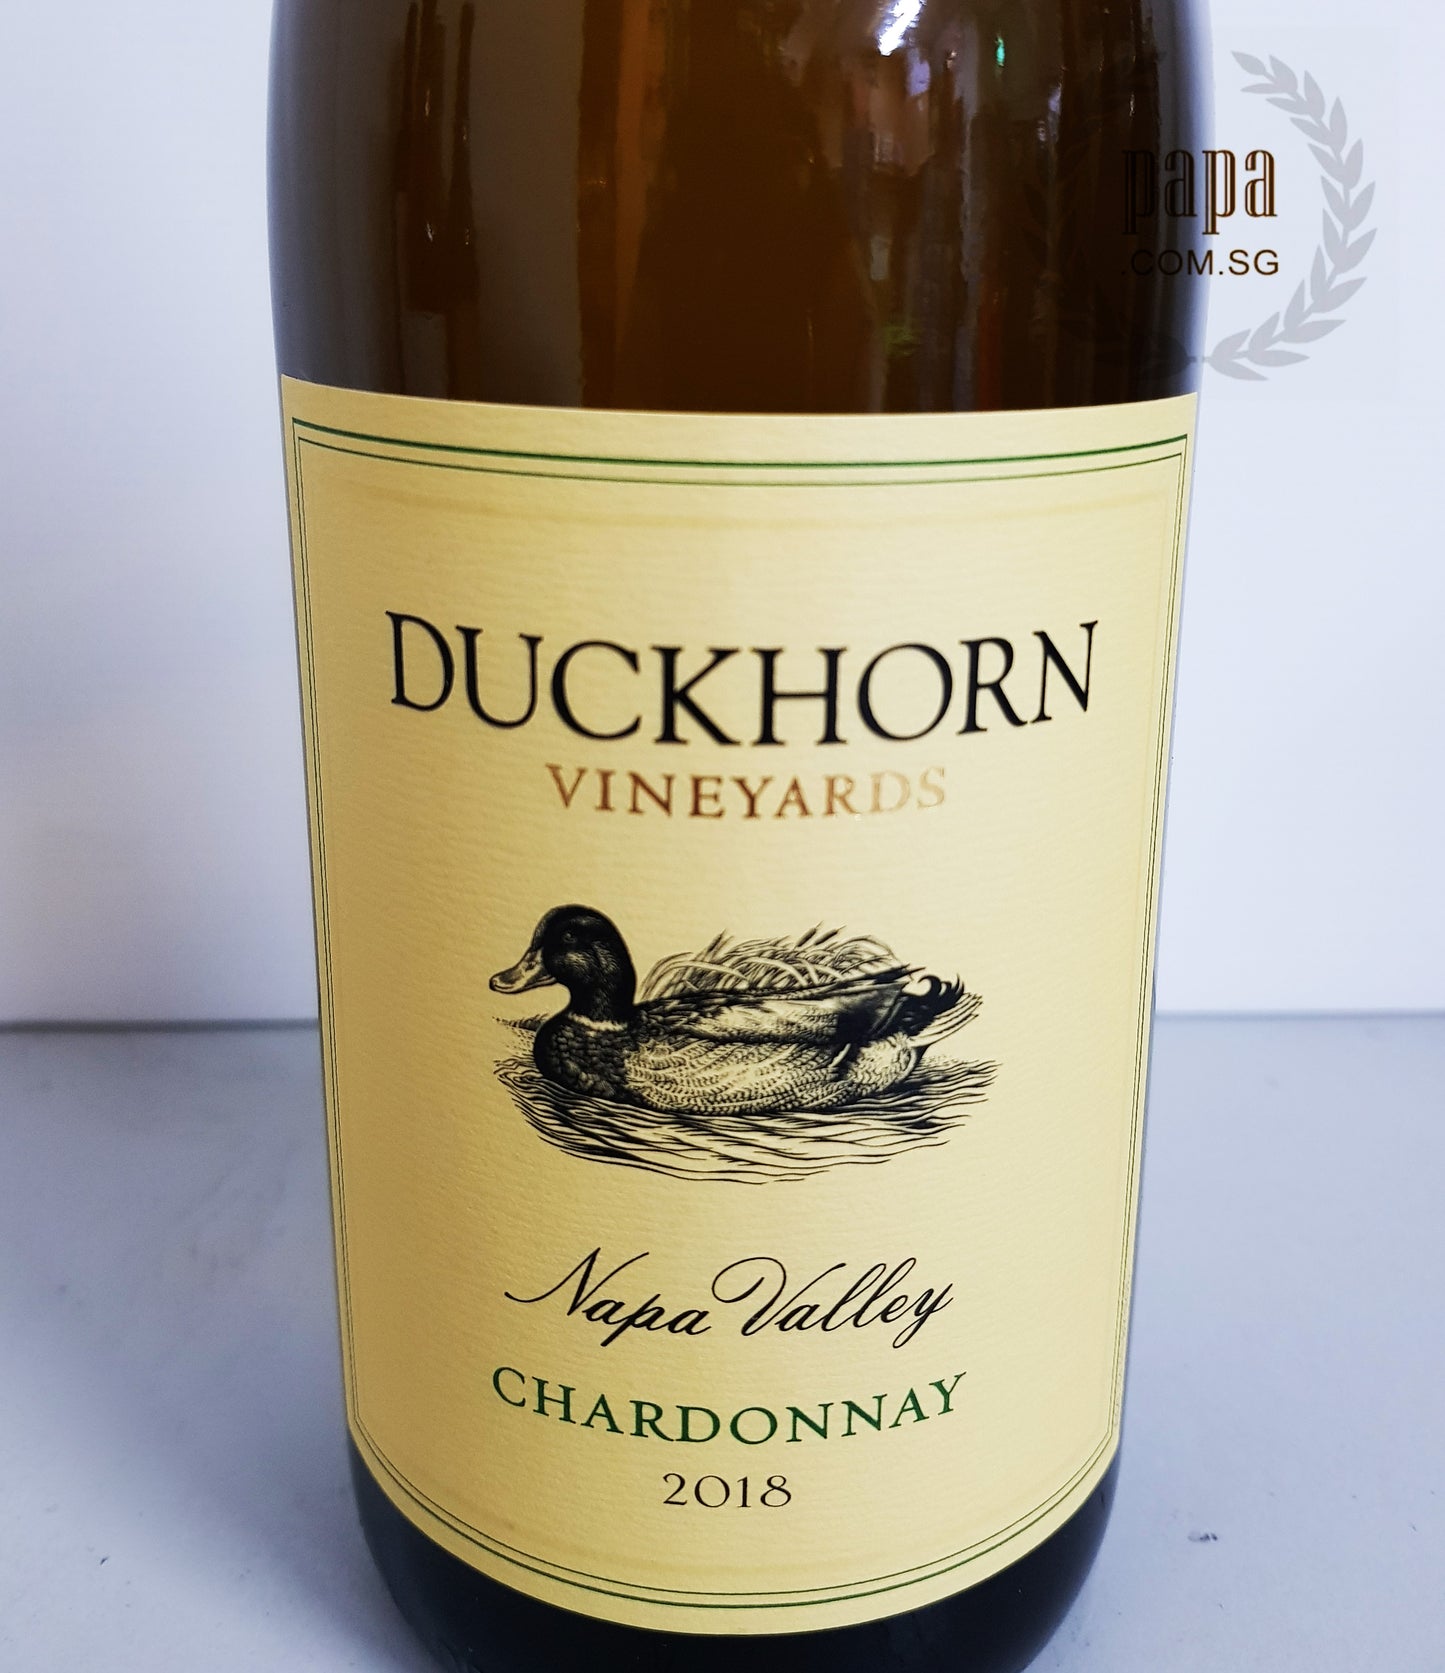 Duckhorn Chardonnay 2018 (Sustainable Vinicultural)